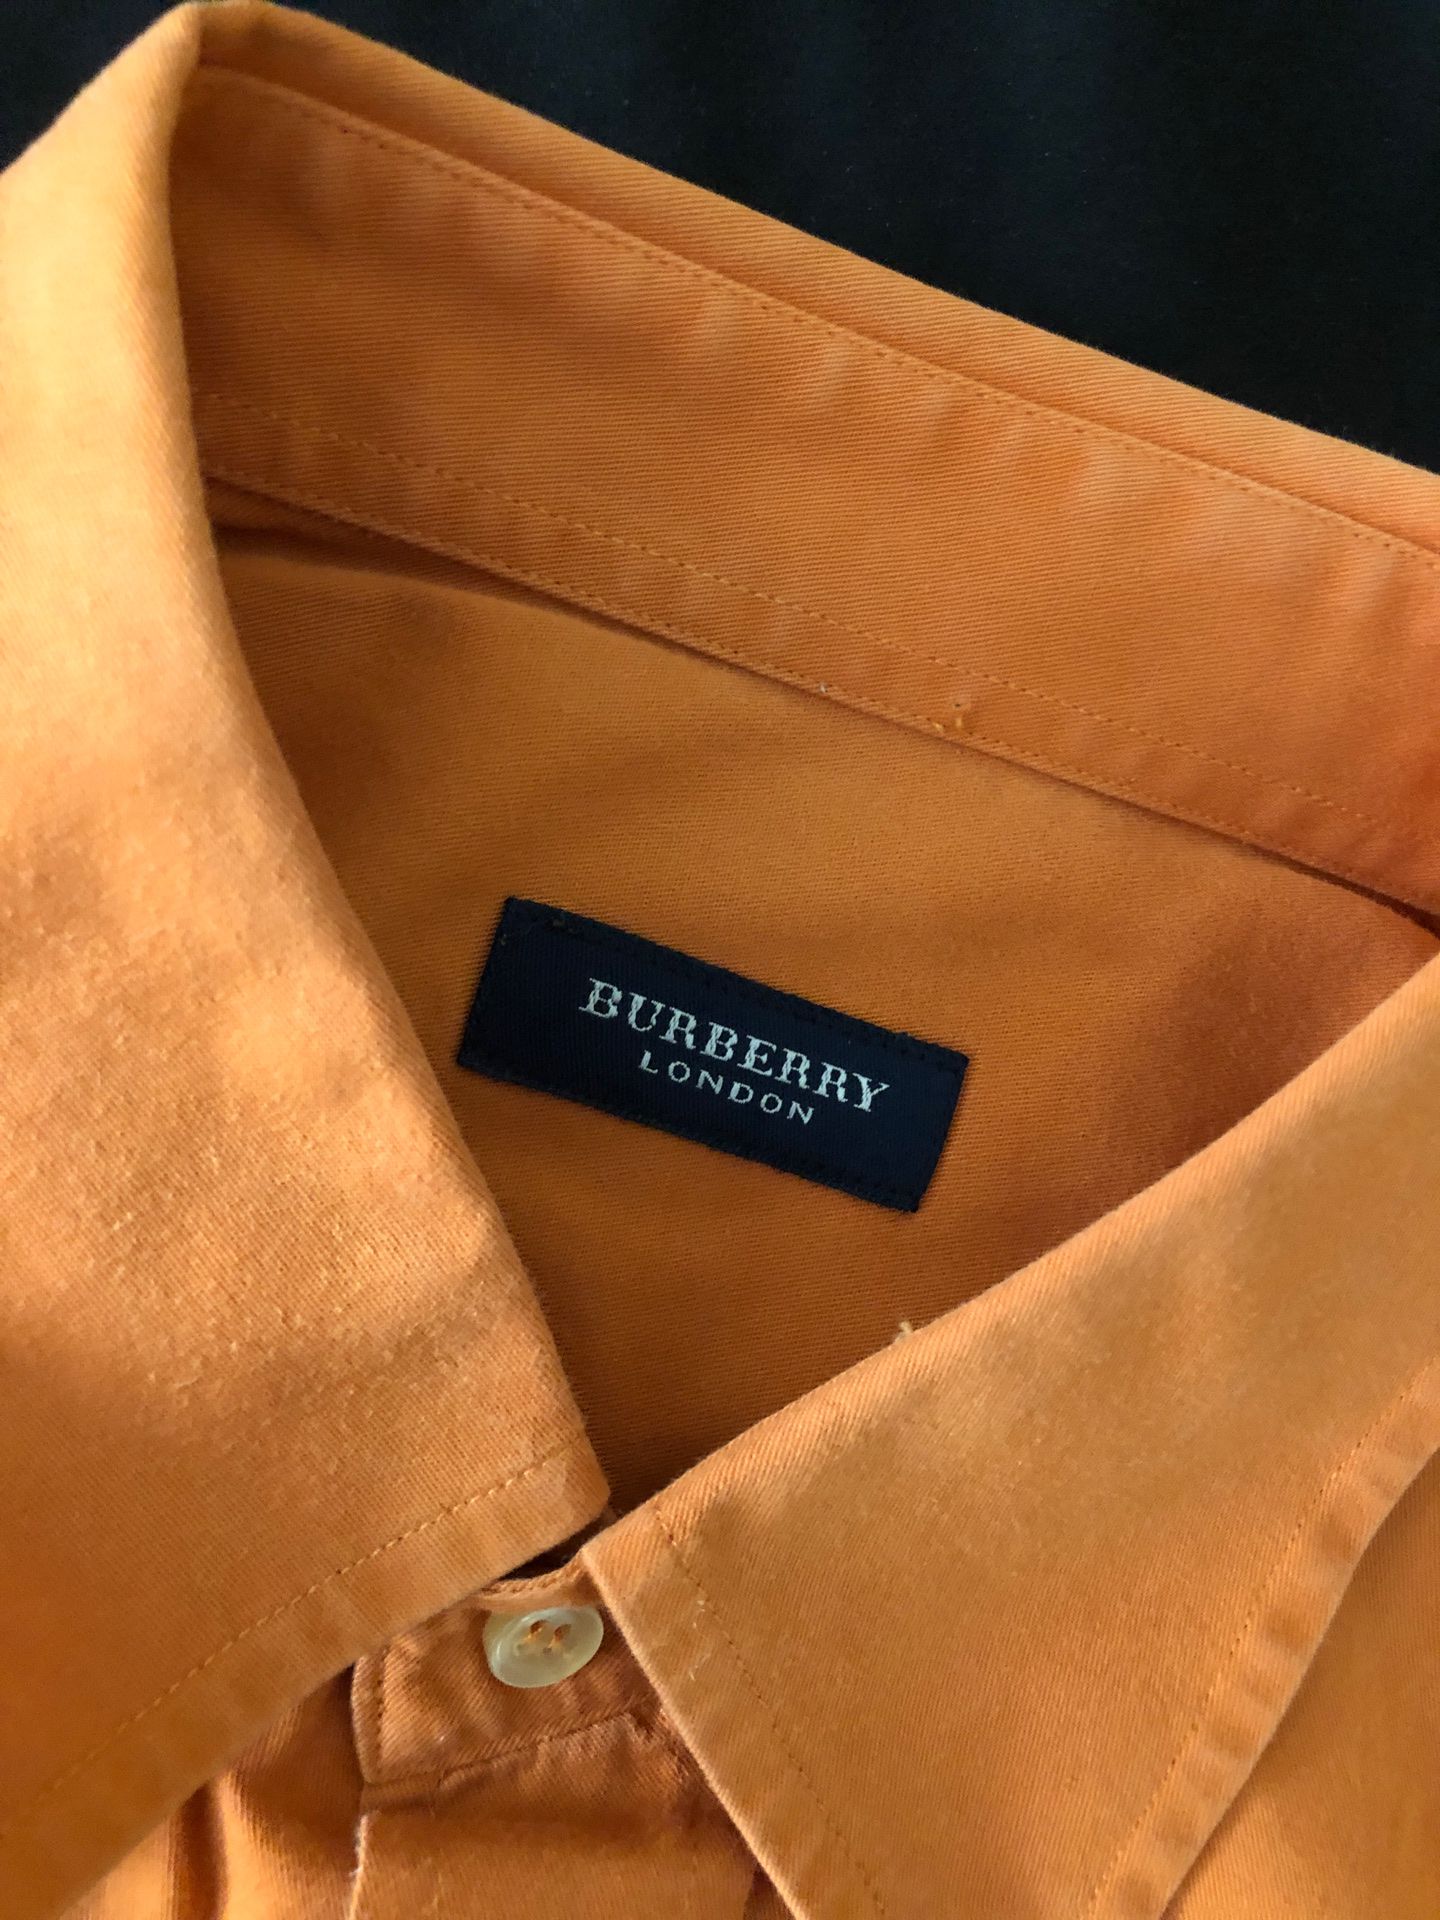 Burberry long sleeve button down shirt